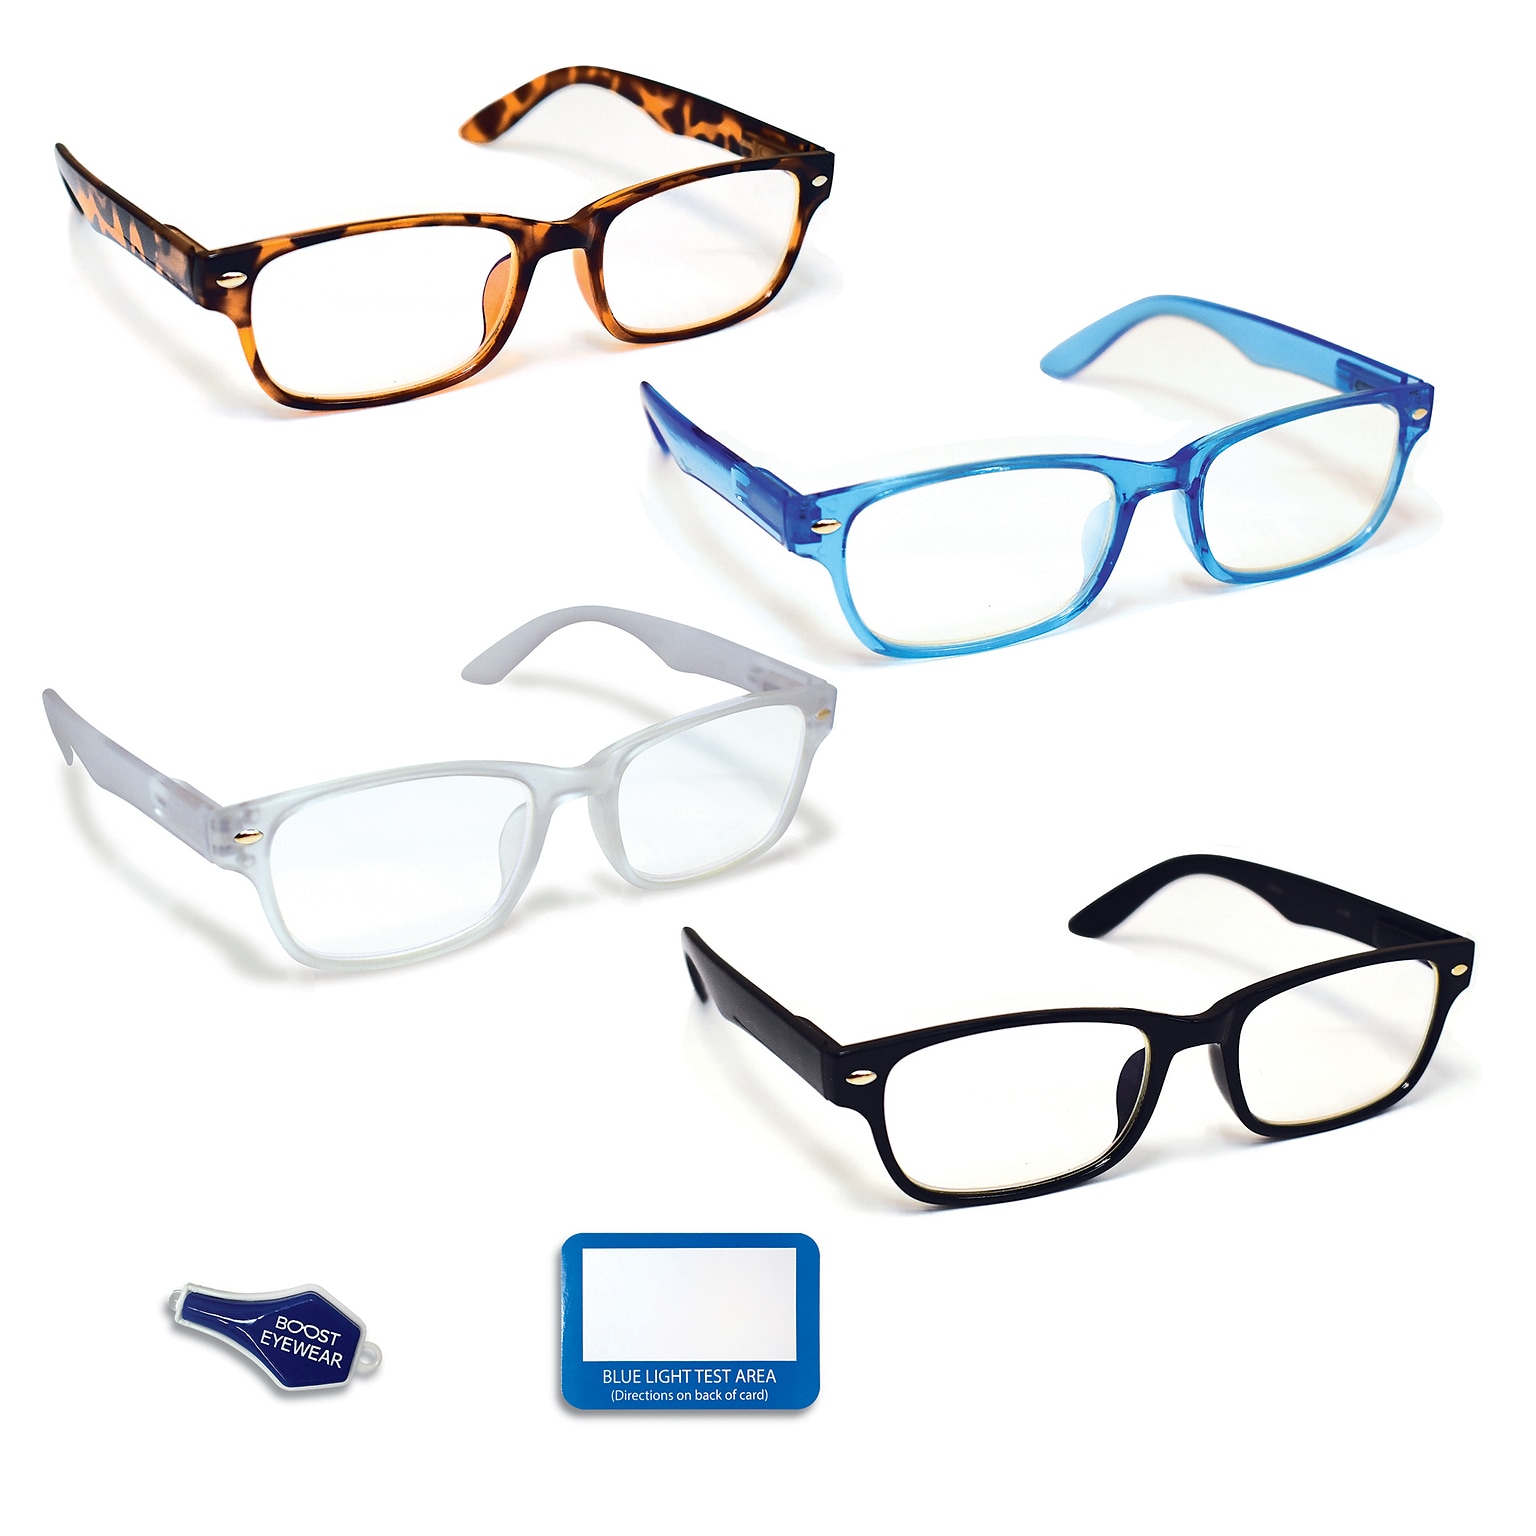 Boost Eyewear Reading Glasses Blue Light Blockers +1.50 Rectangular Frames Assorted Colors (20150-4PK)